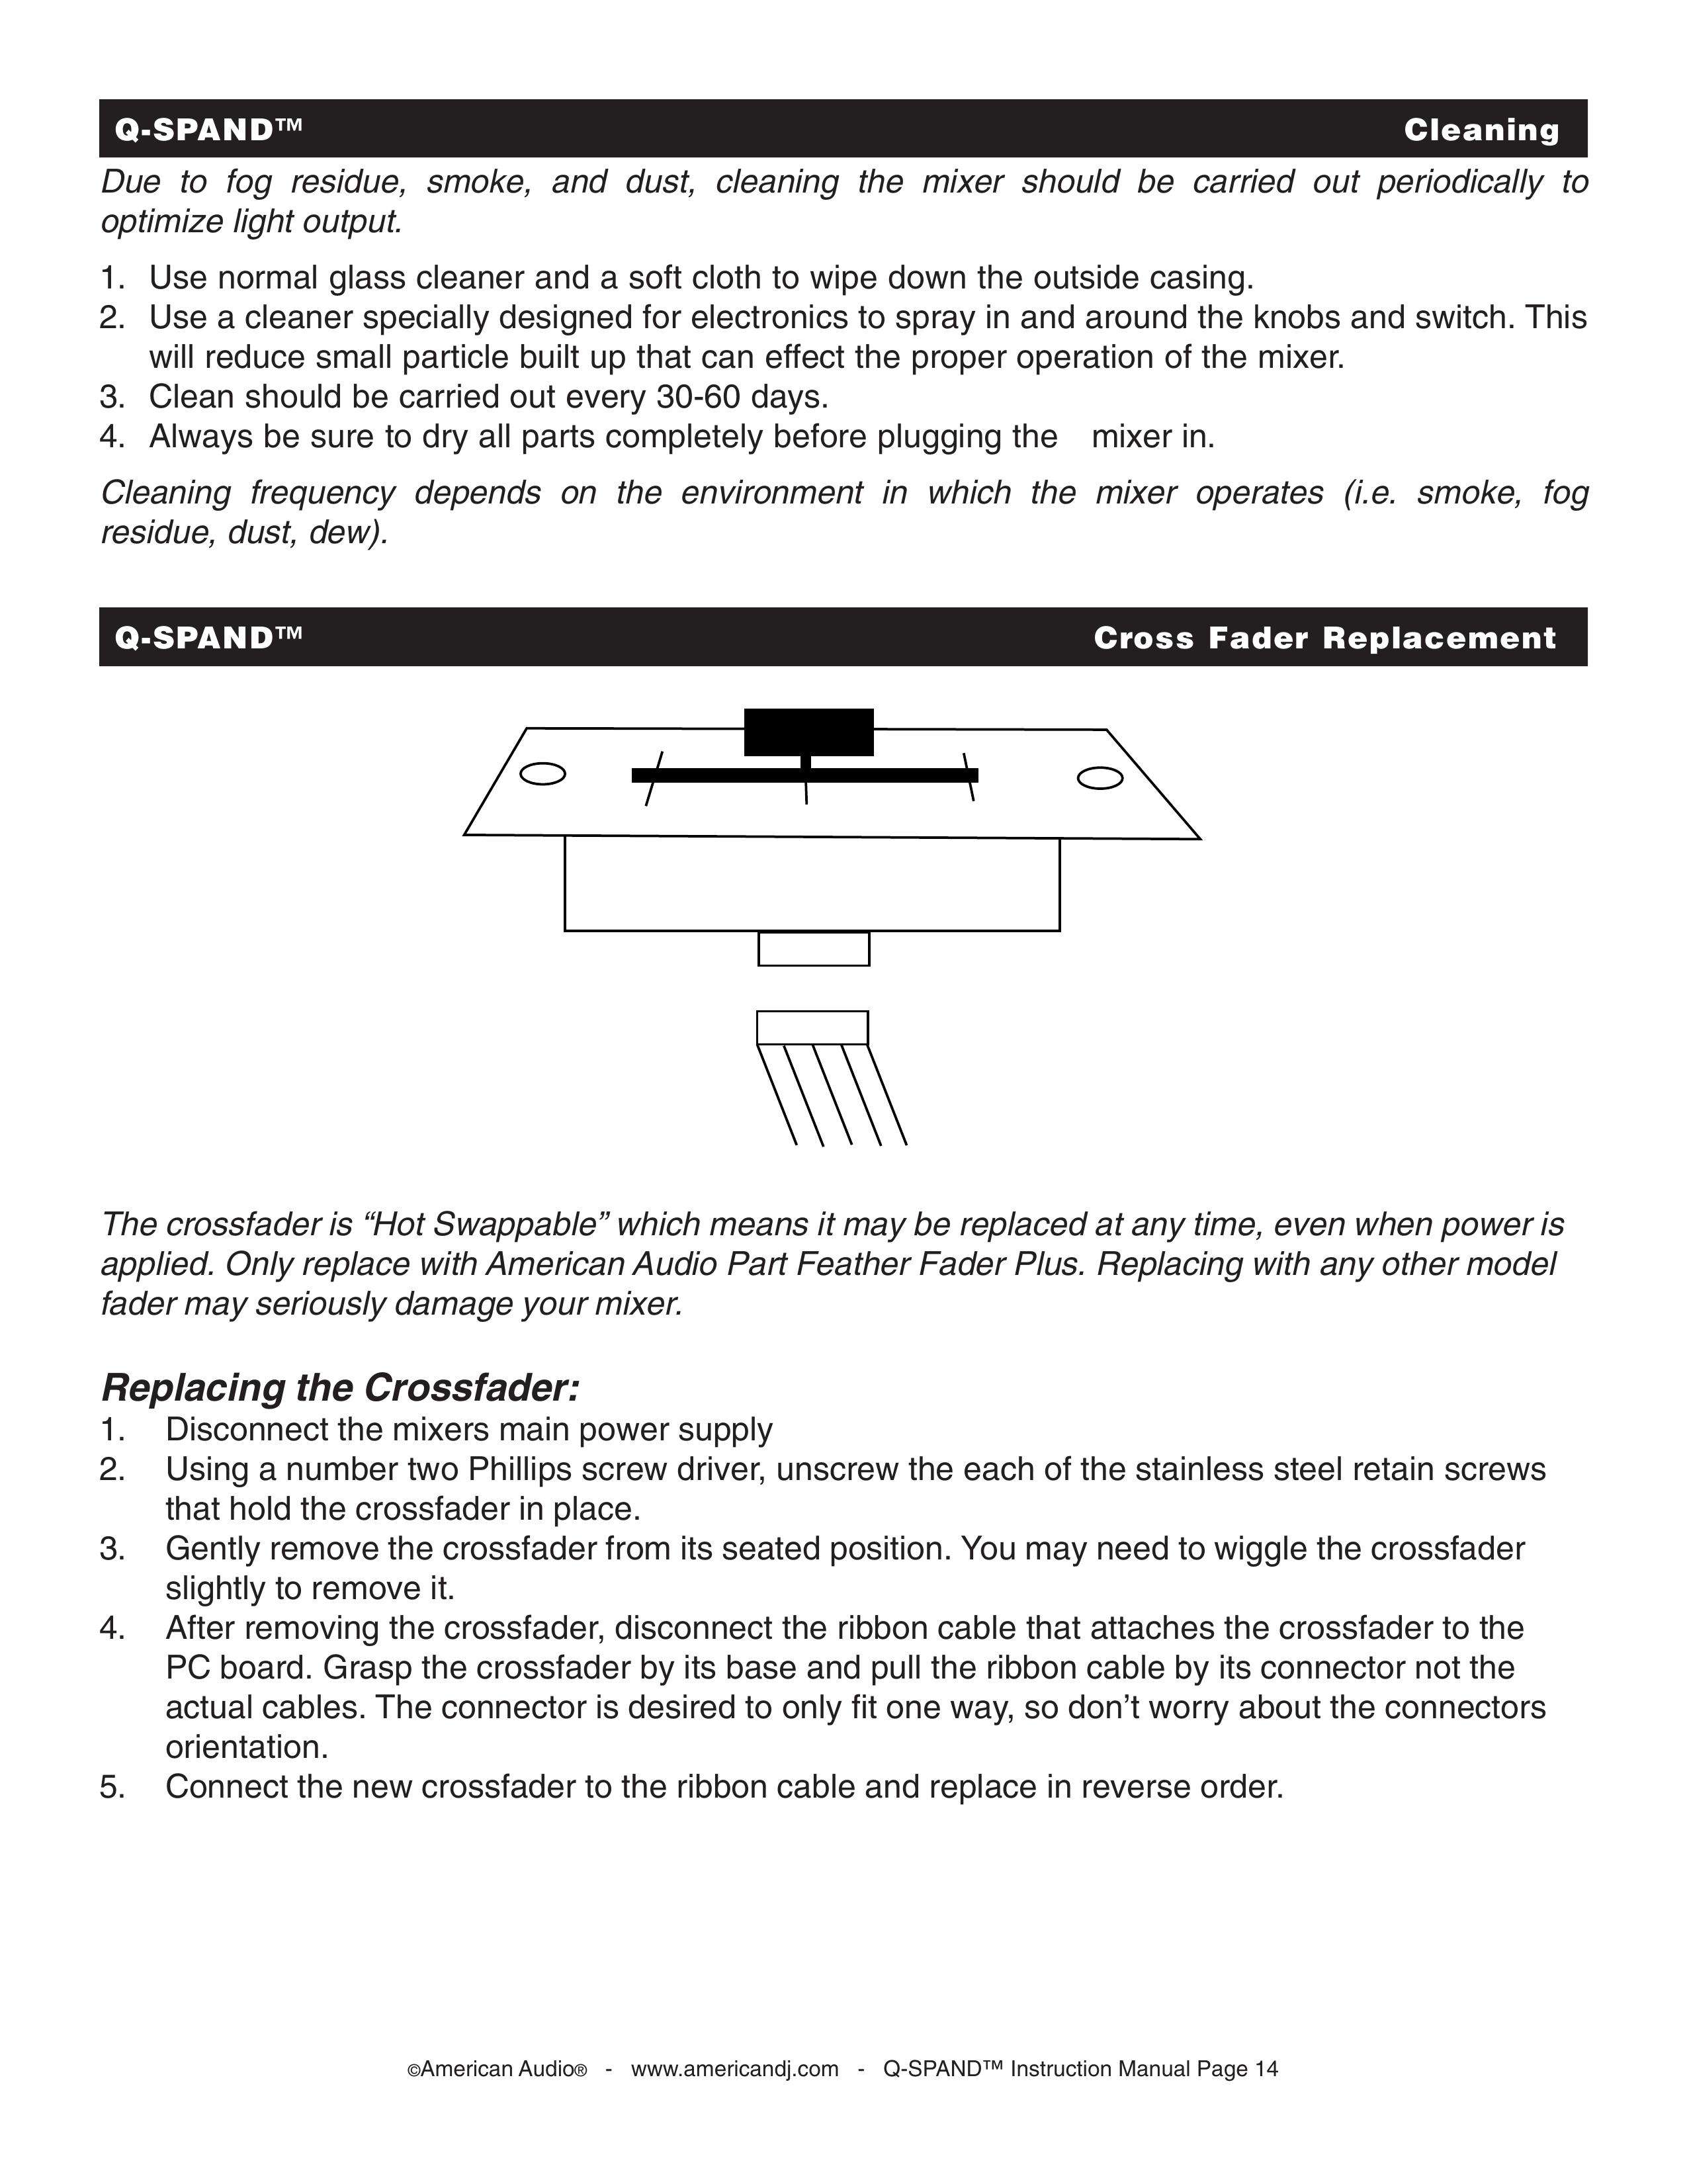 American Audio Q-SPAND DJ Equipment User Manual (Page 14)